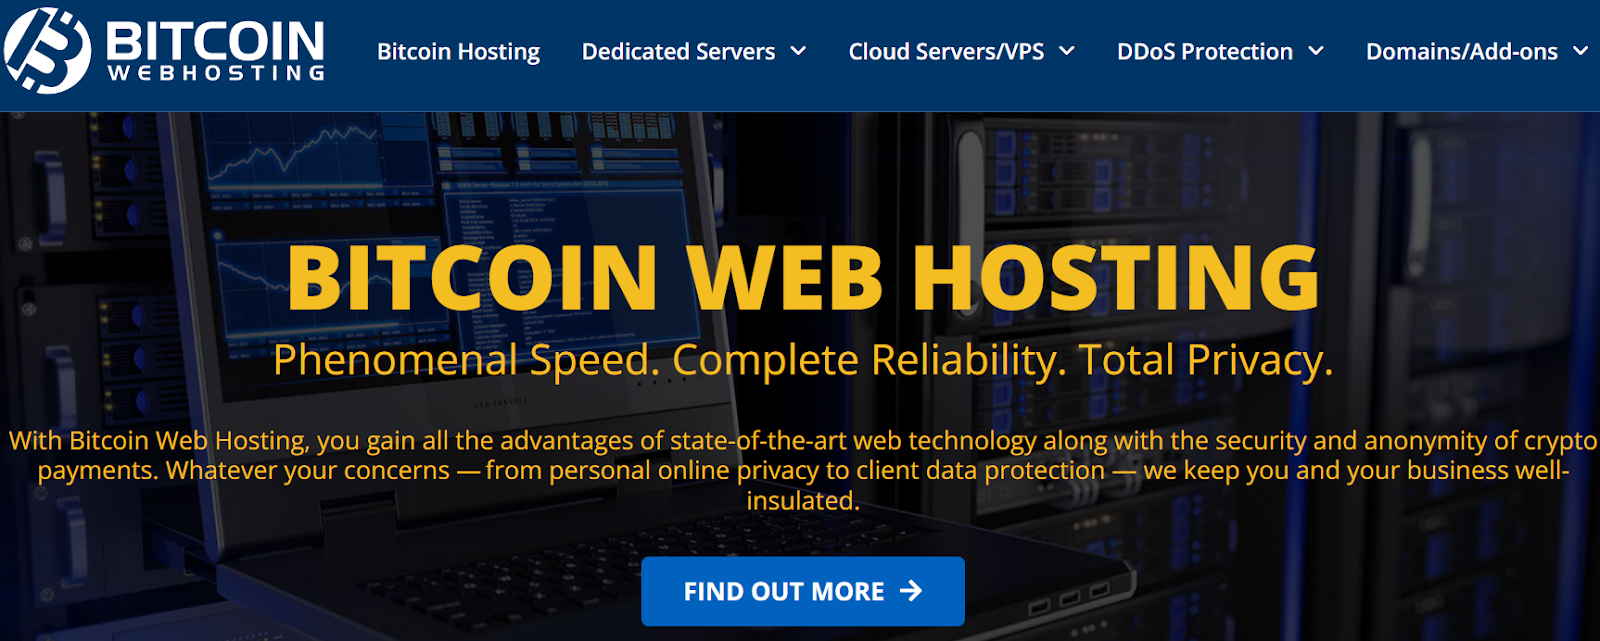 Bitcoin Web Hosting Homepage